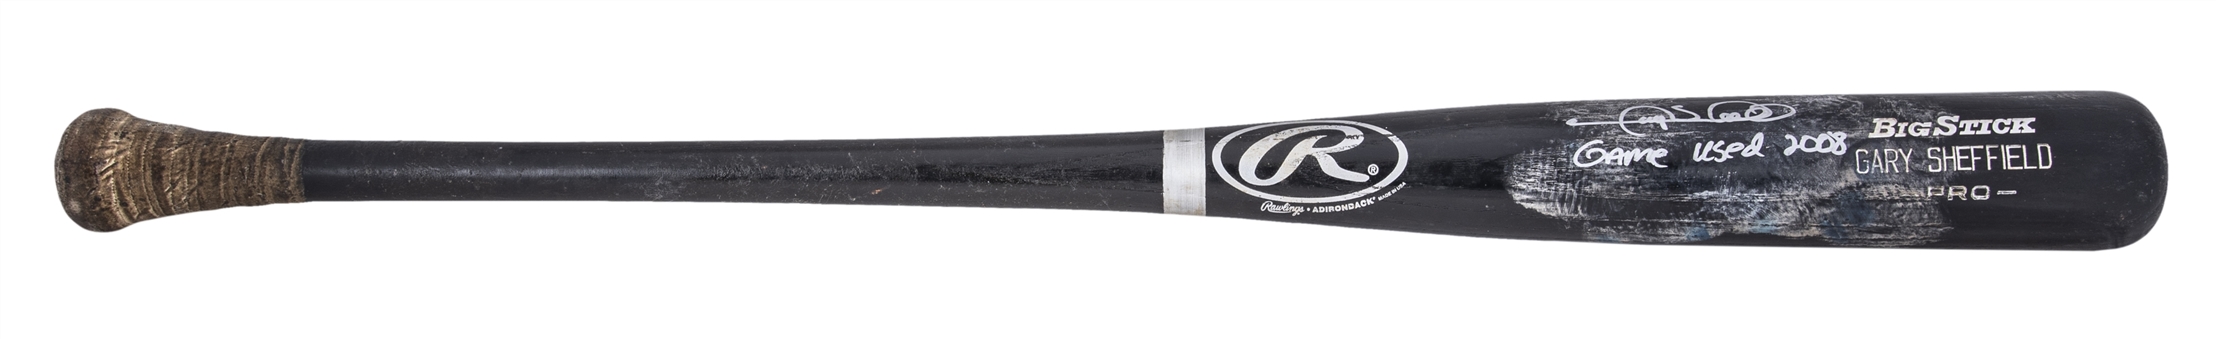 2008 Gary Sheffield Game Used & Signed Rawlings 170B Model Bat (PSA/DNA GU 10 & Beckett)